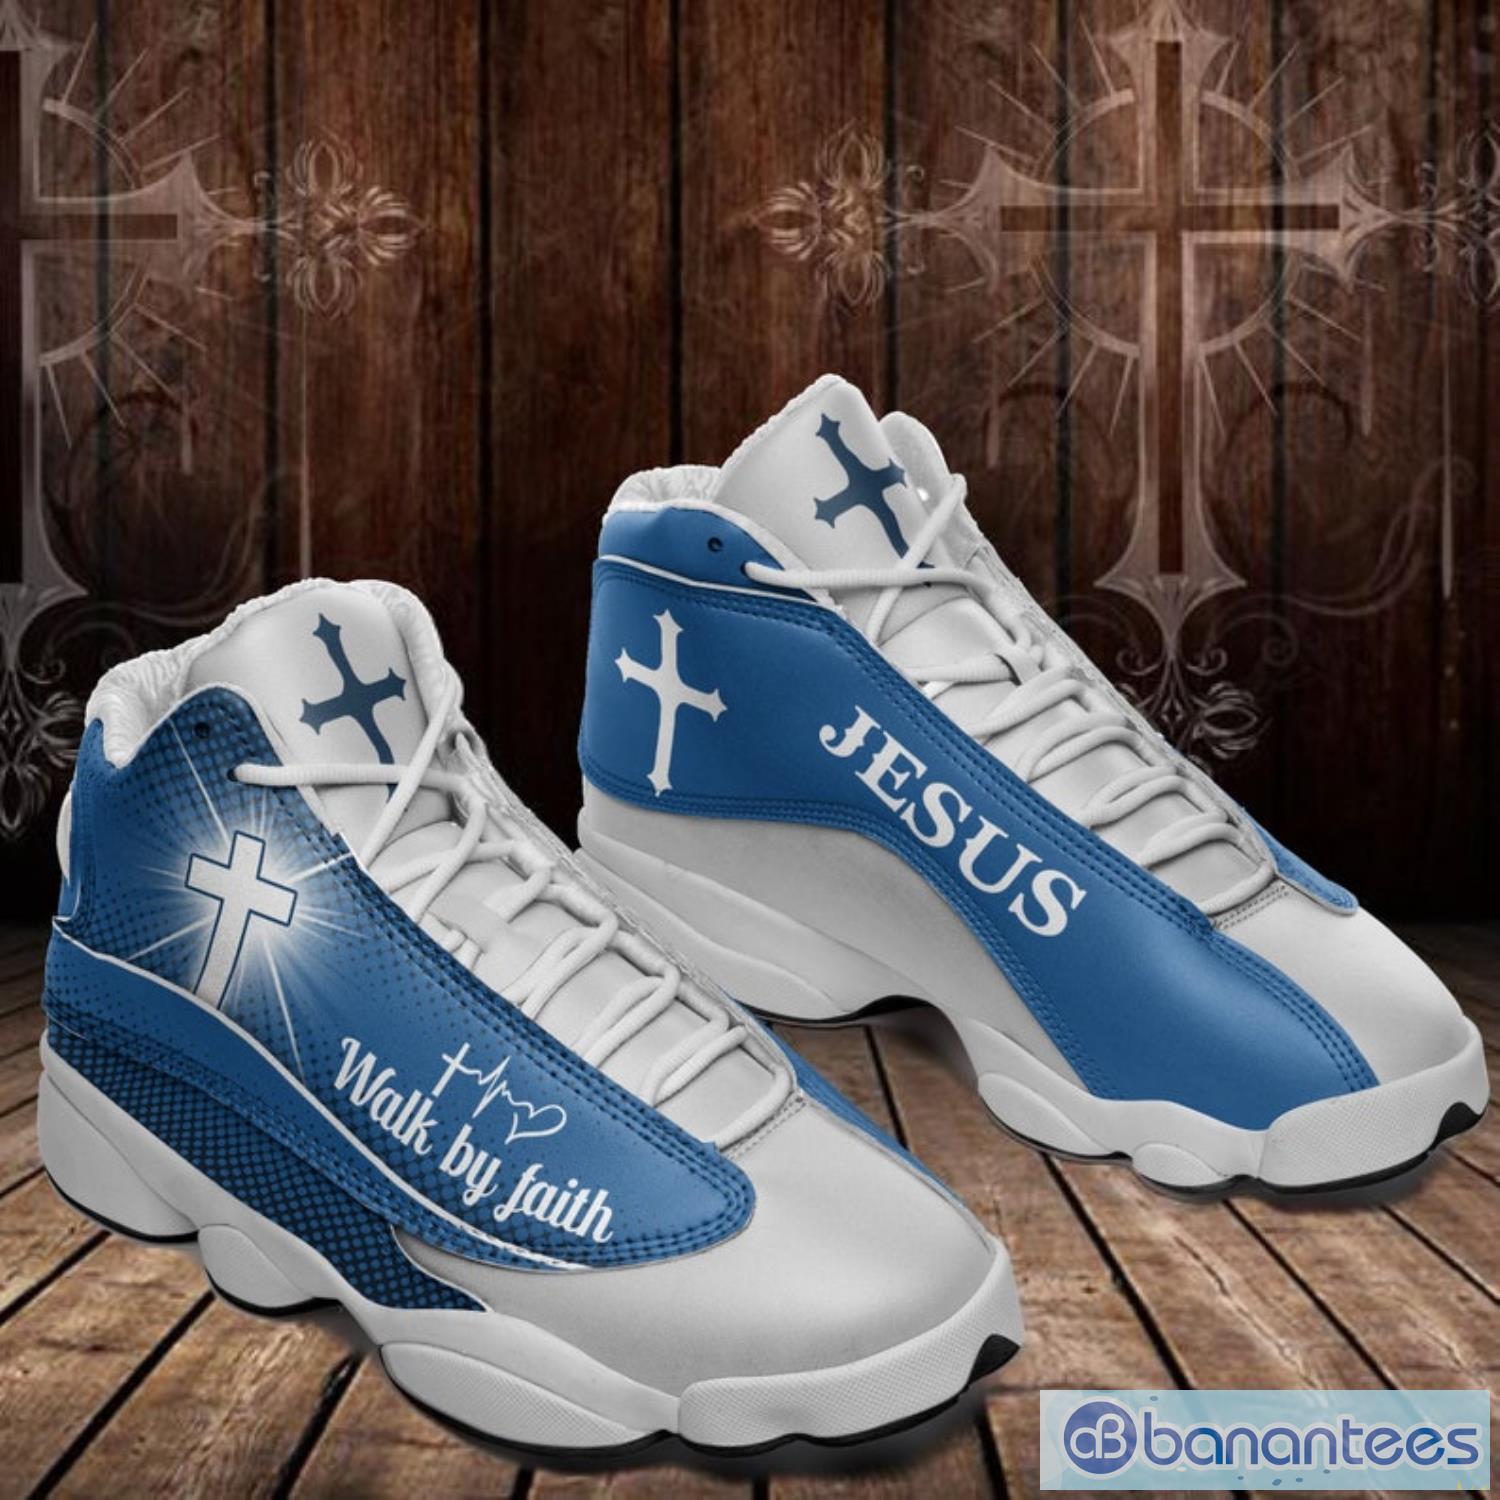 Jesus Faith Over Fear Air Jordan 13 Shoes - It's RobinLoriNOW!